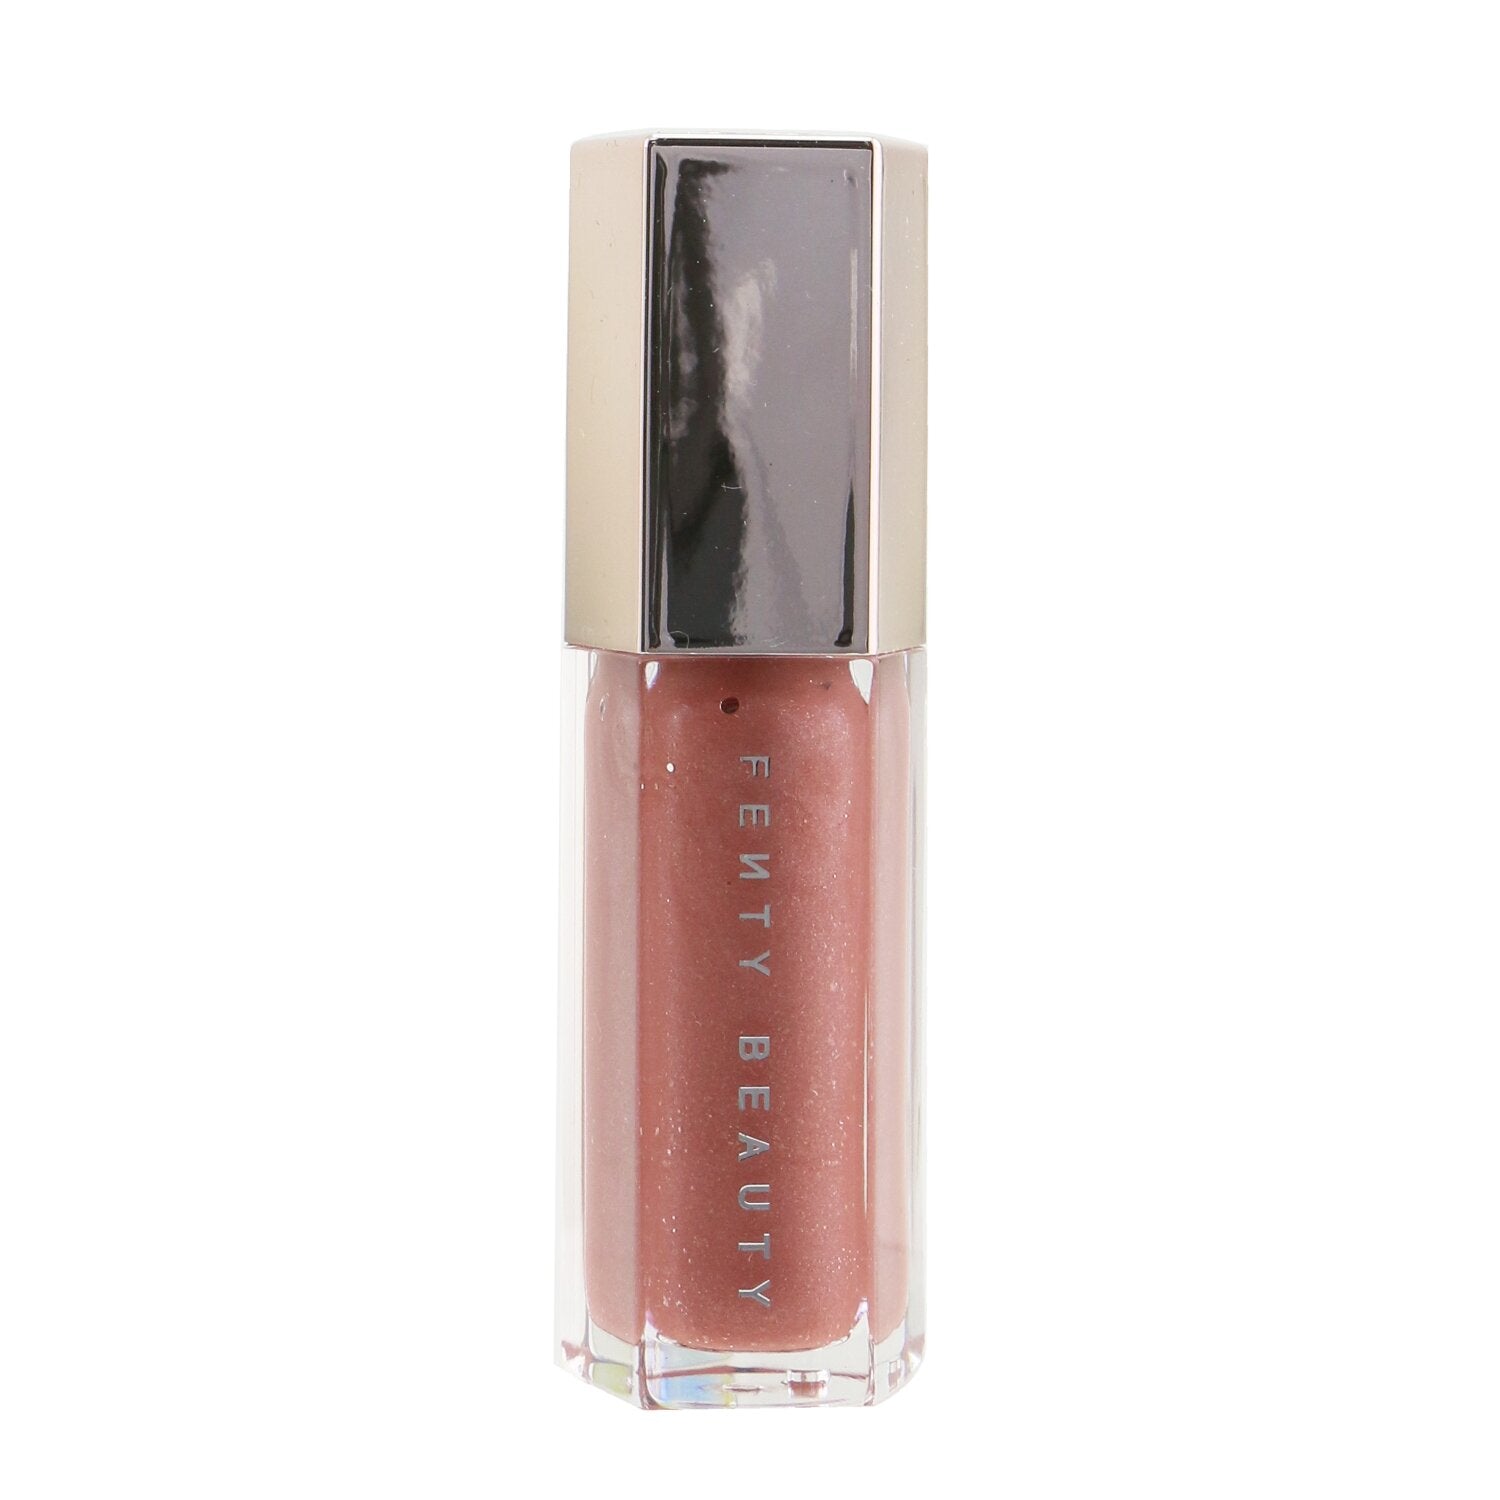 NYX Filler Instinct Plumping Lip Polish Gloss - # 02 Brunch Drunk  2.5ml/0.08oz – Fresh Beauty Co. USA